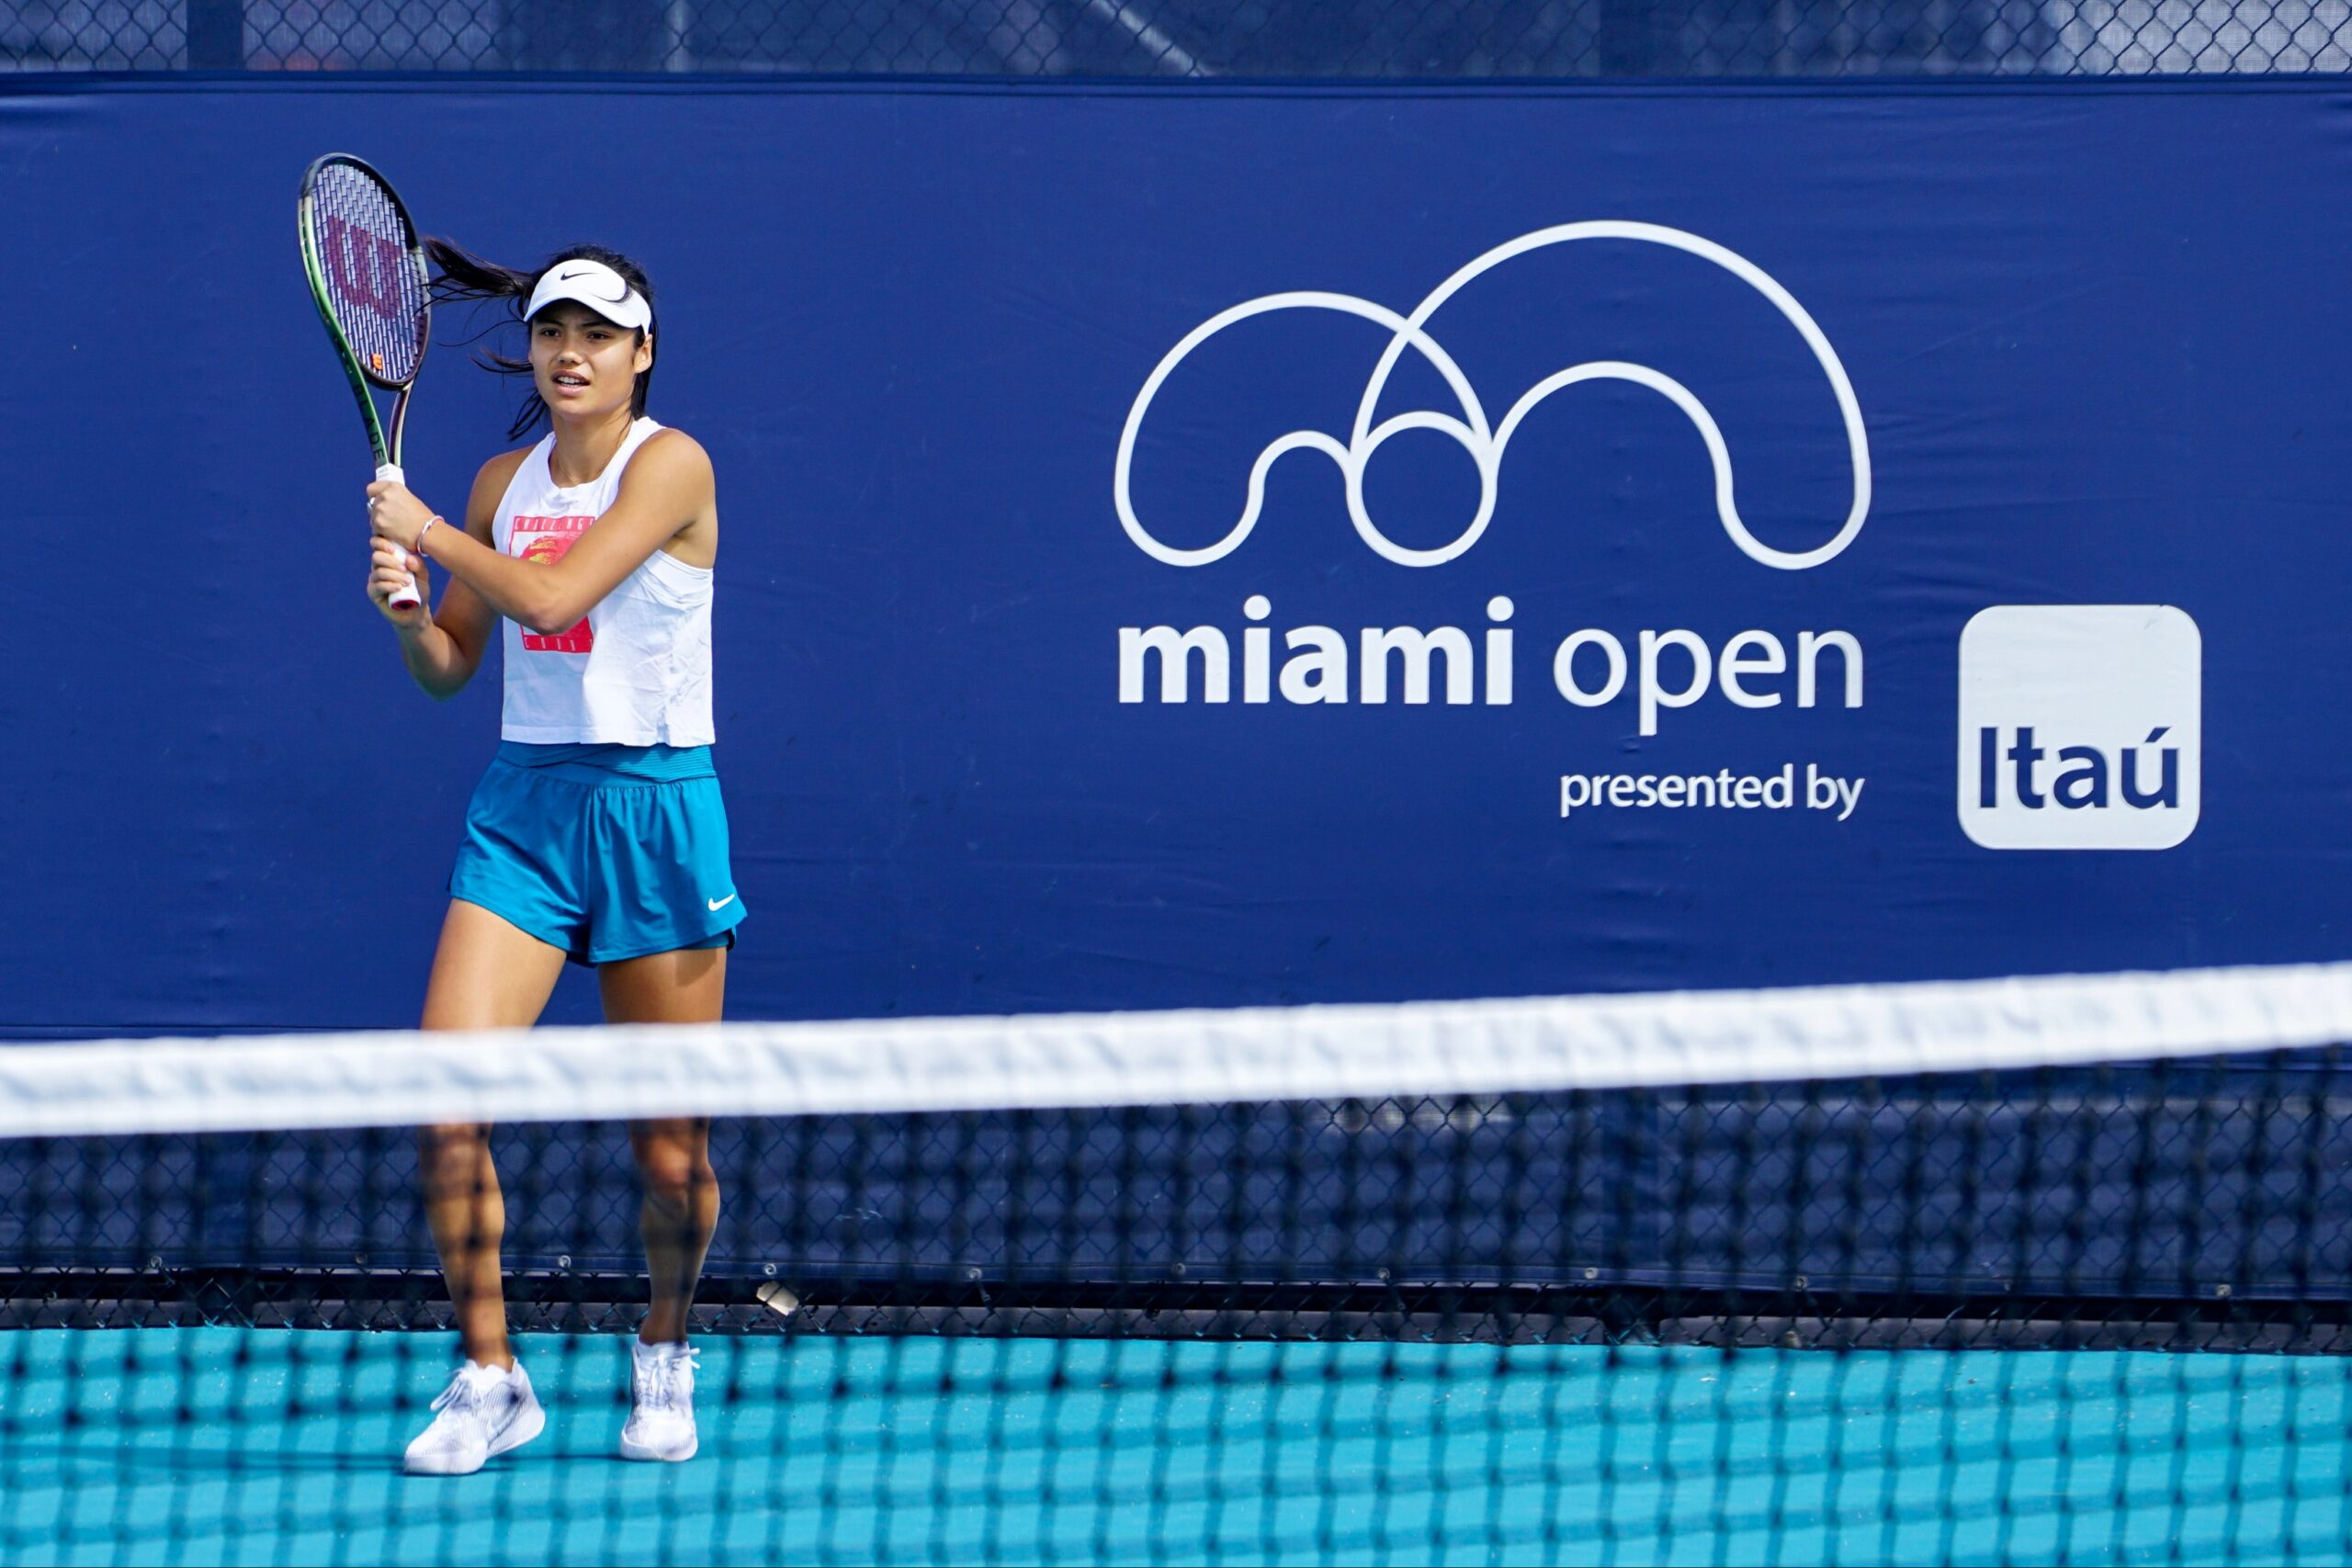 US Open Champions Dominic Thiem and Emma Raducanu Named 2023 Miami Open